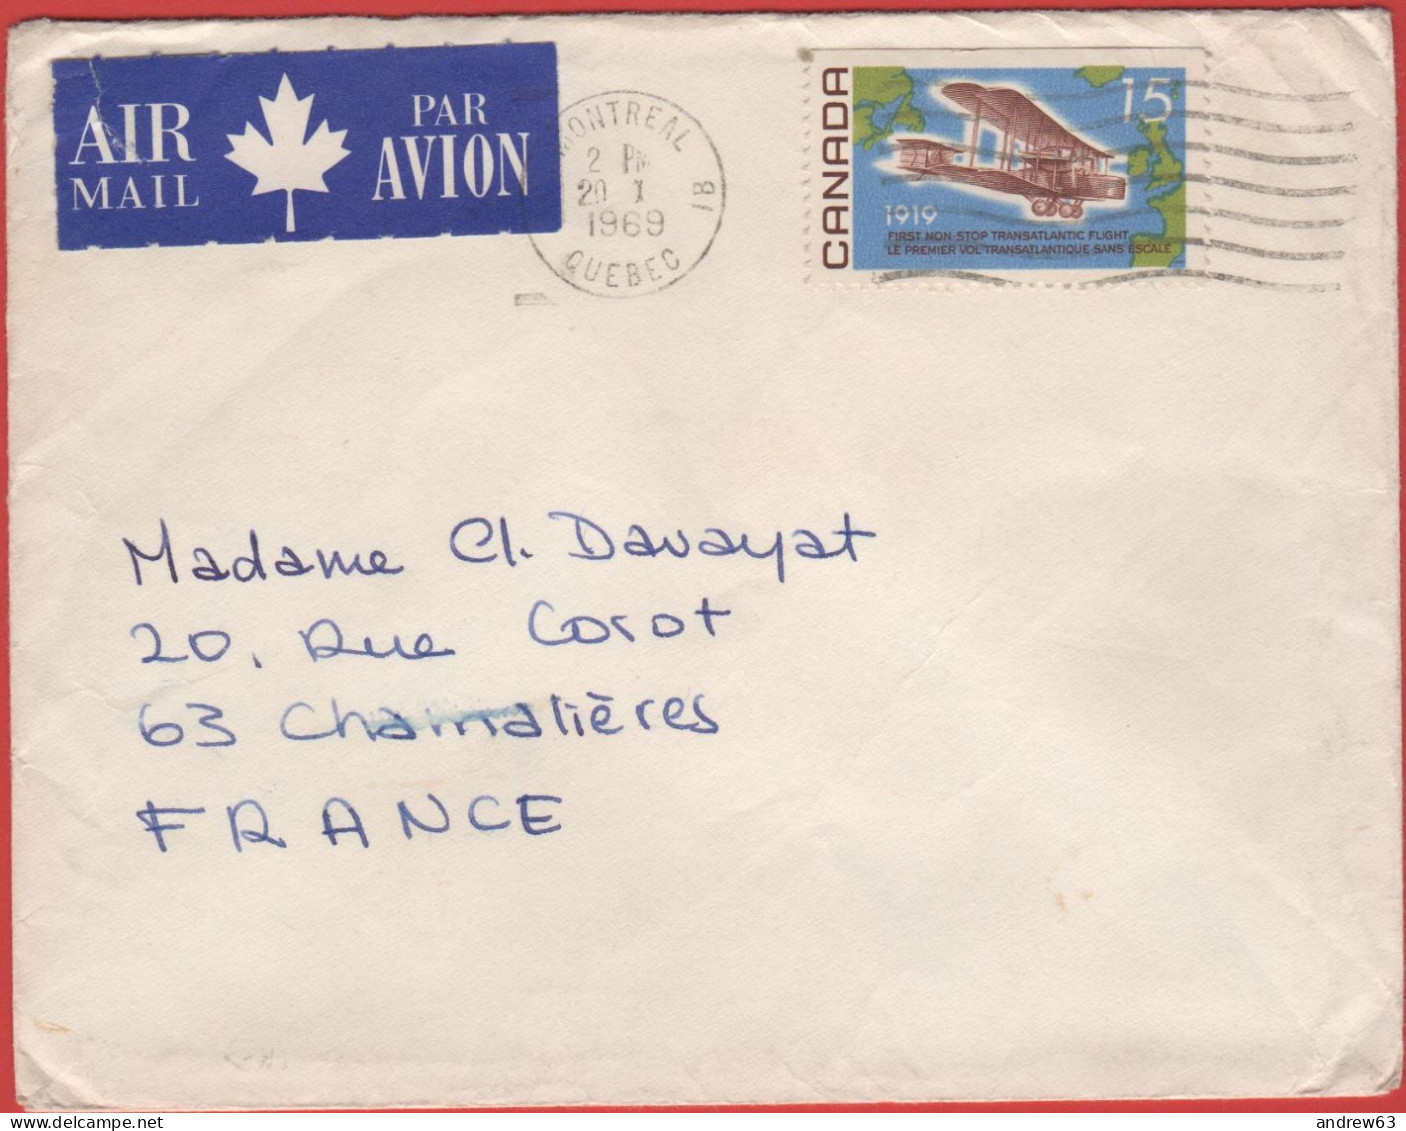 CANADA - 1969 - 15c First Non Stop Transatlantic Flight - Air Mail - Viaggiata Da Montreal Per Chamalières, France - Briefe U. Dokumente